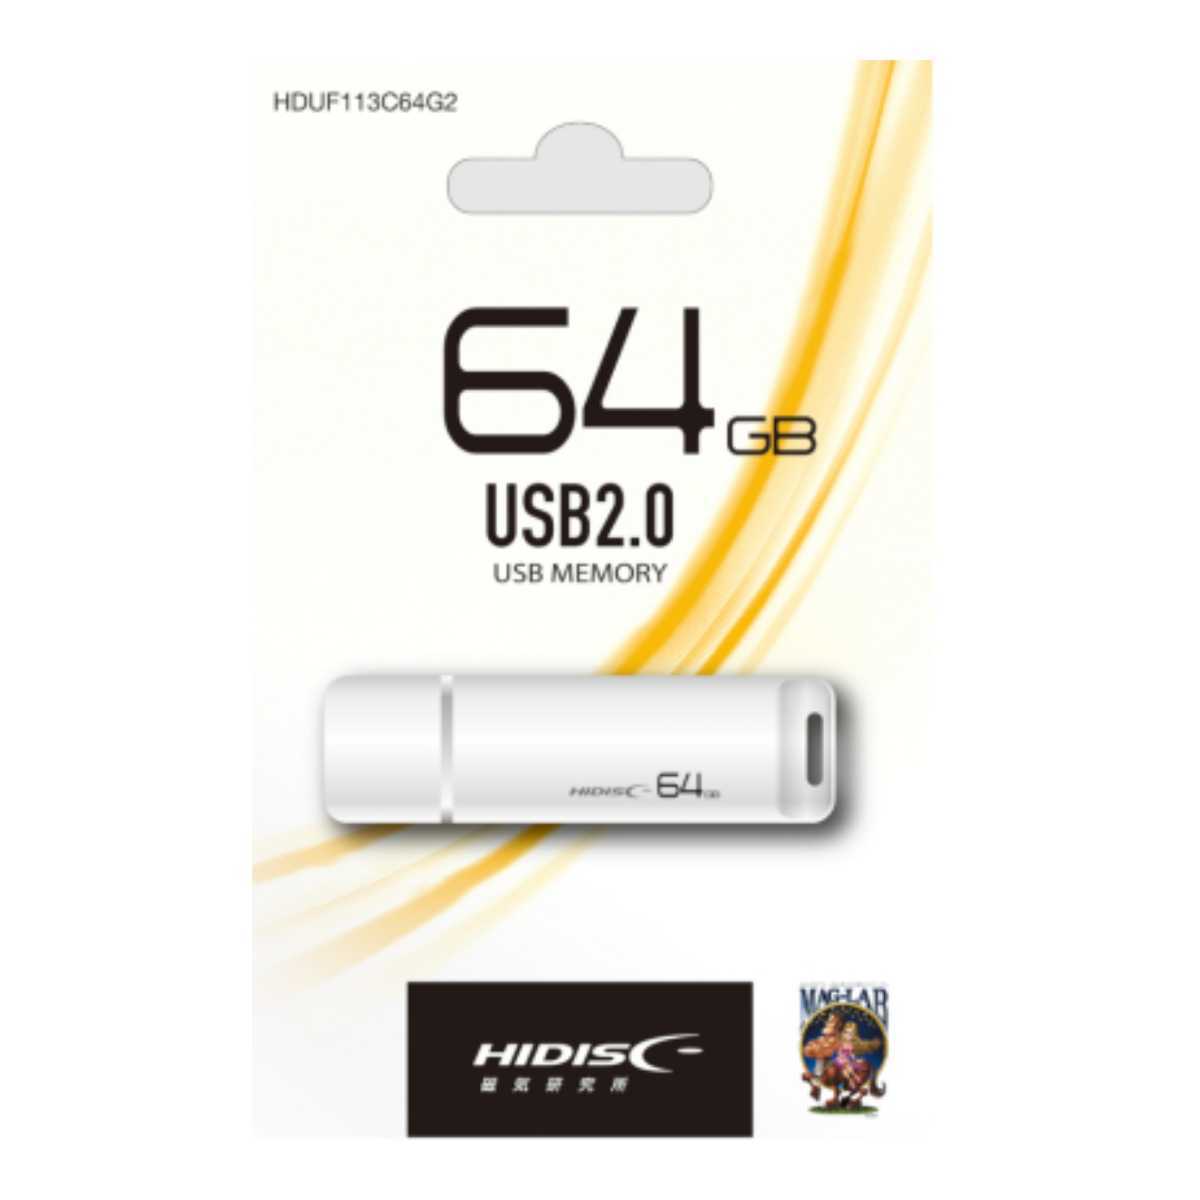 USBフラッシュメモリー 64GB (HI-DISC）HDUF113C64G2 【1円スタート出品・新品・送料無料】